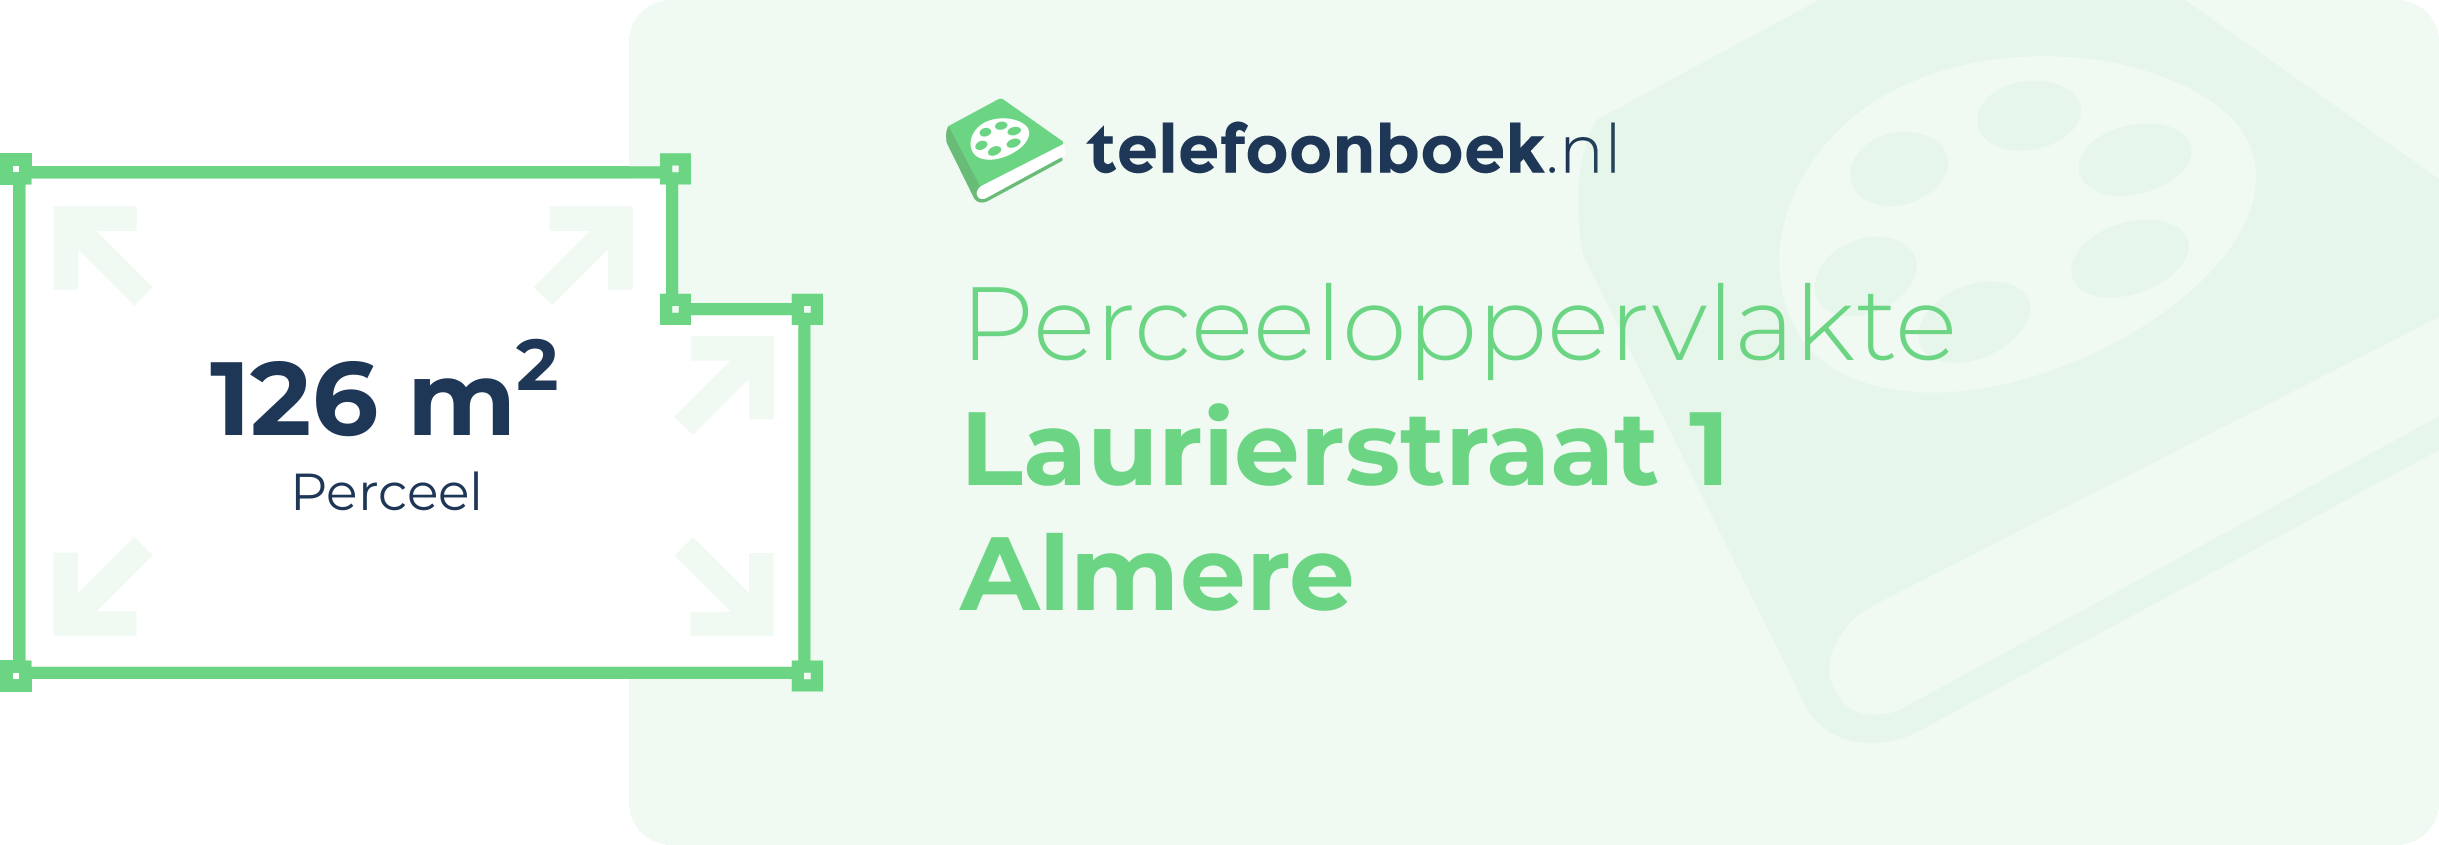 Perceeloppervlakte Laurierstraat 1 Almere